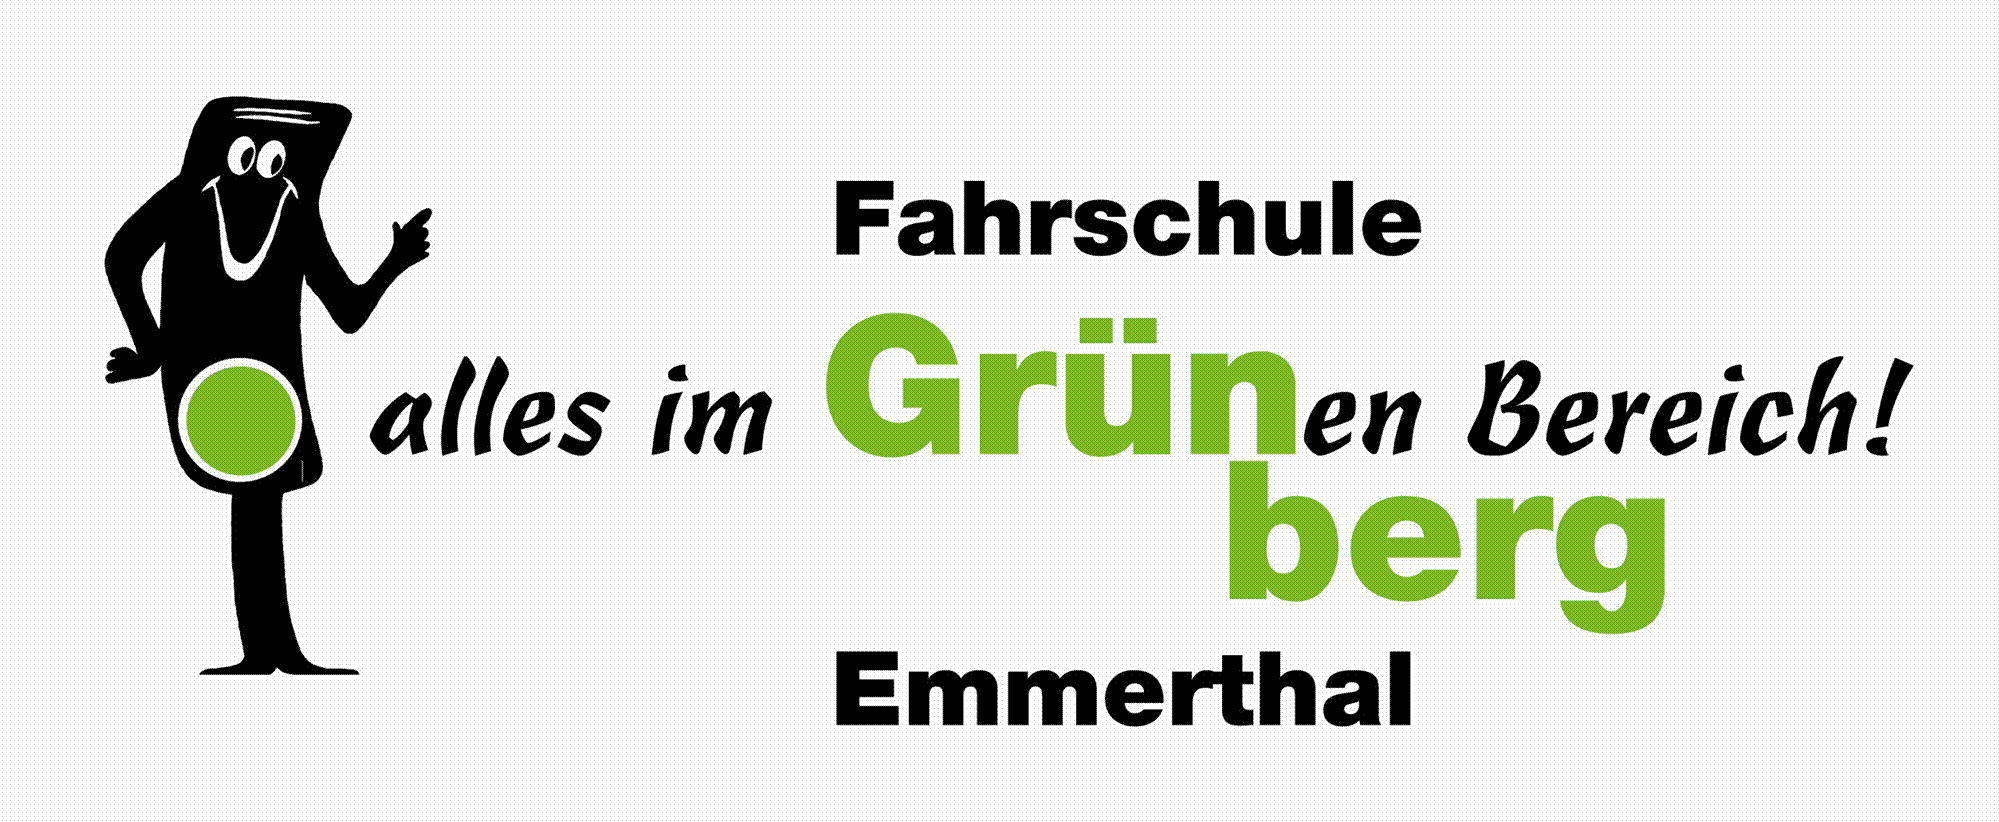 (c) Fahrschule-gruenberg.de